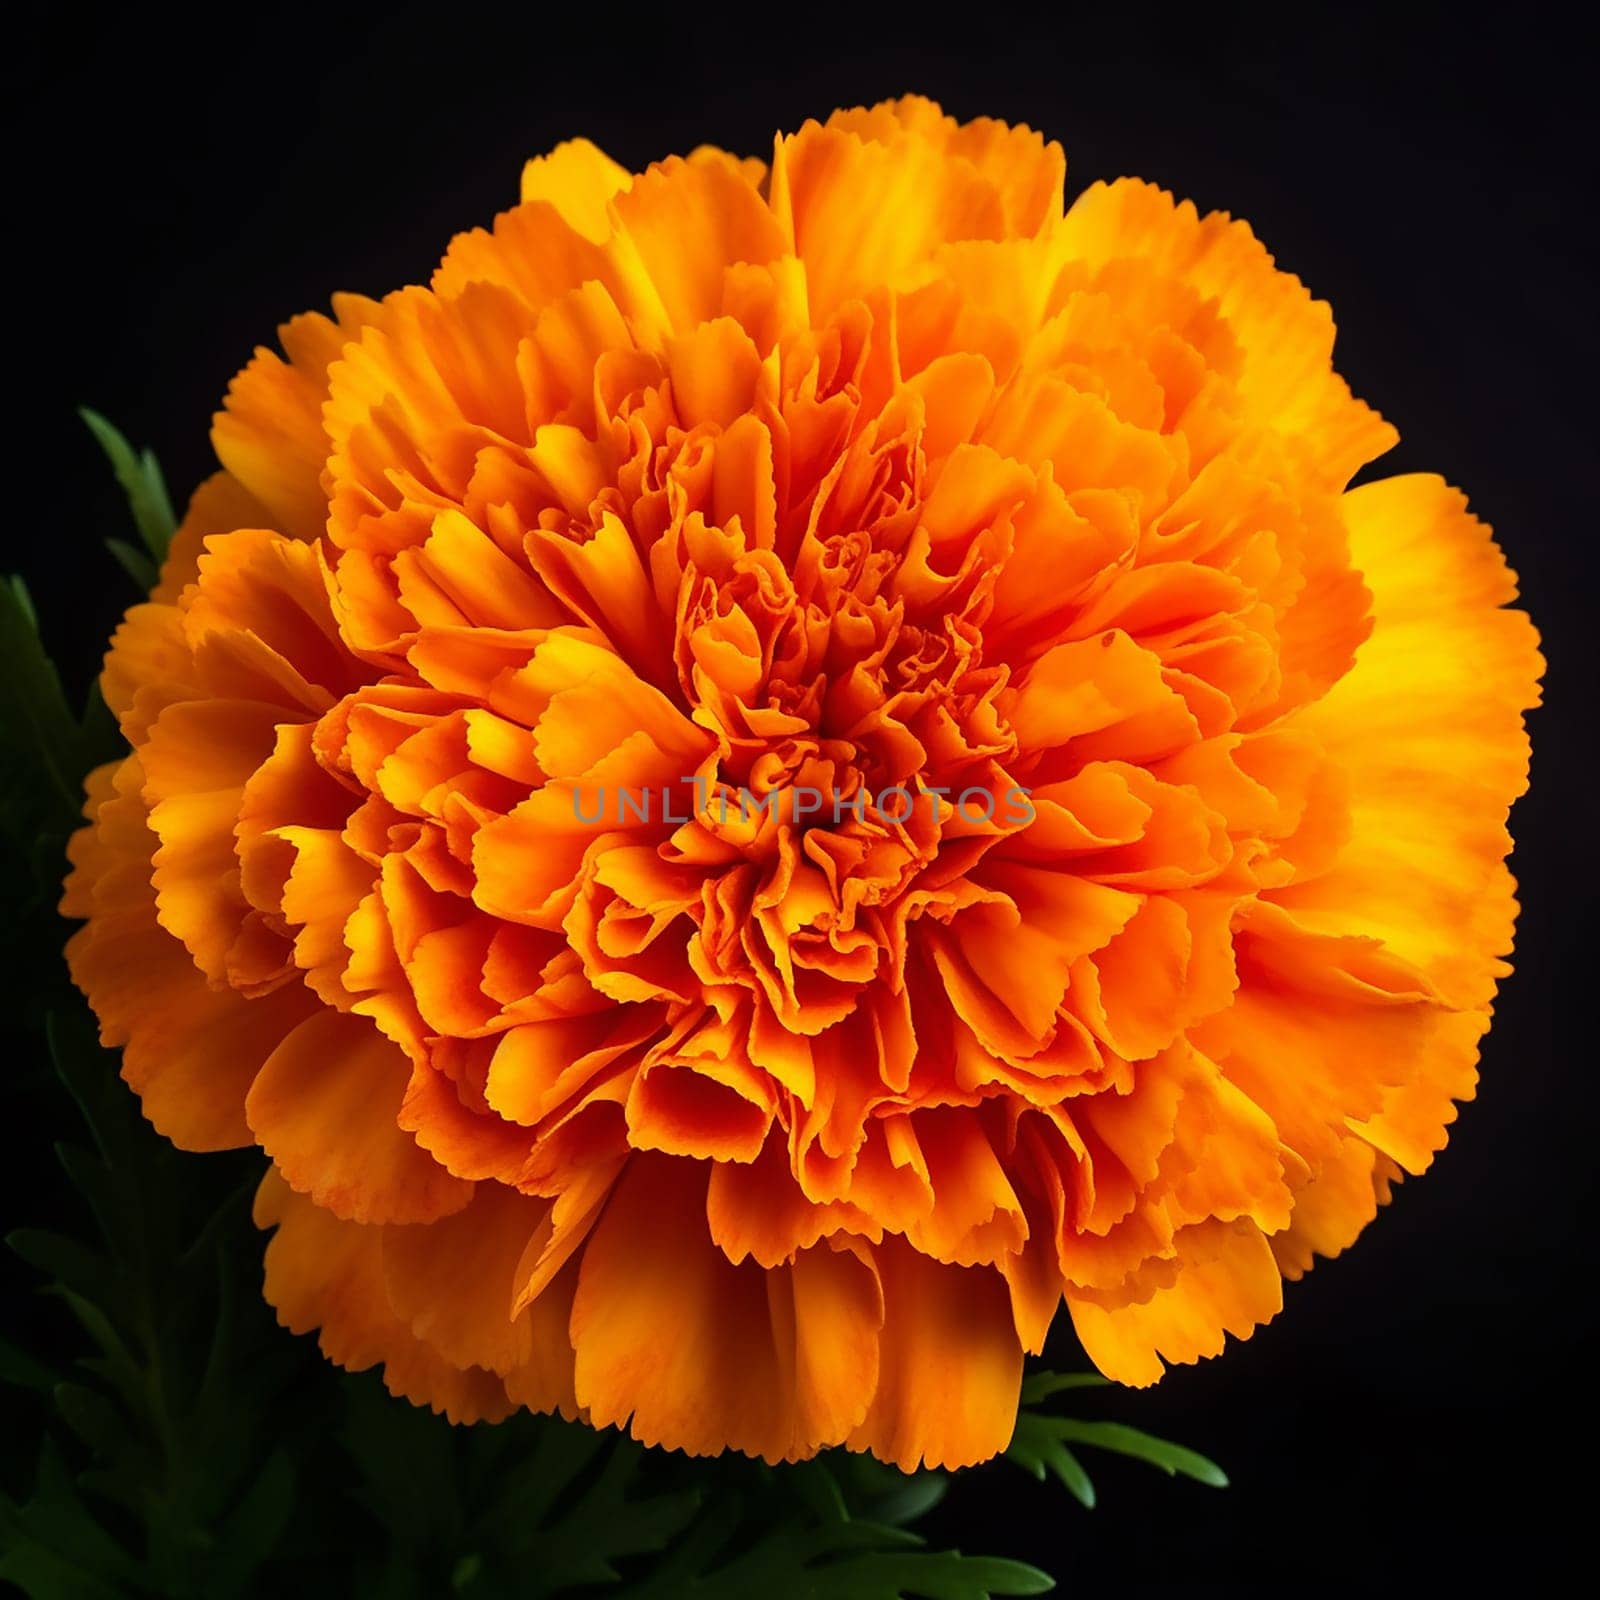 Vibrant orange marigold flower against a black background. by Hype2art